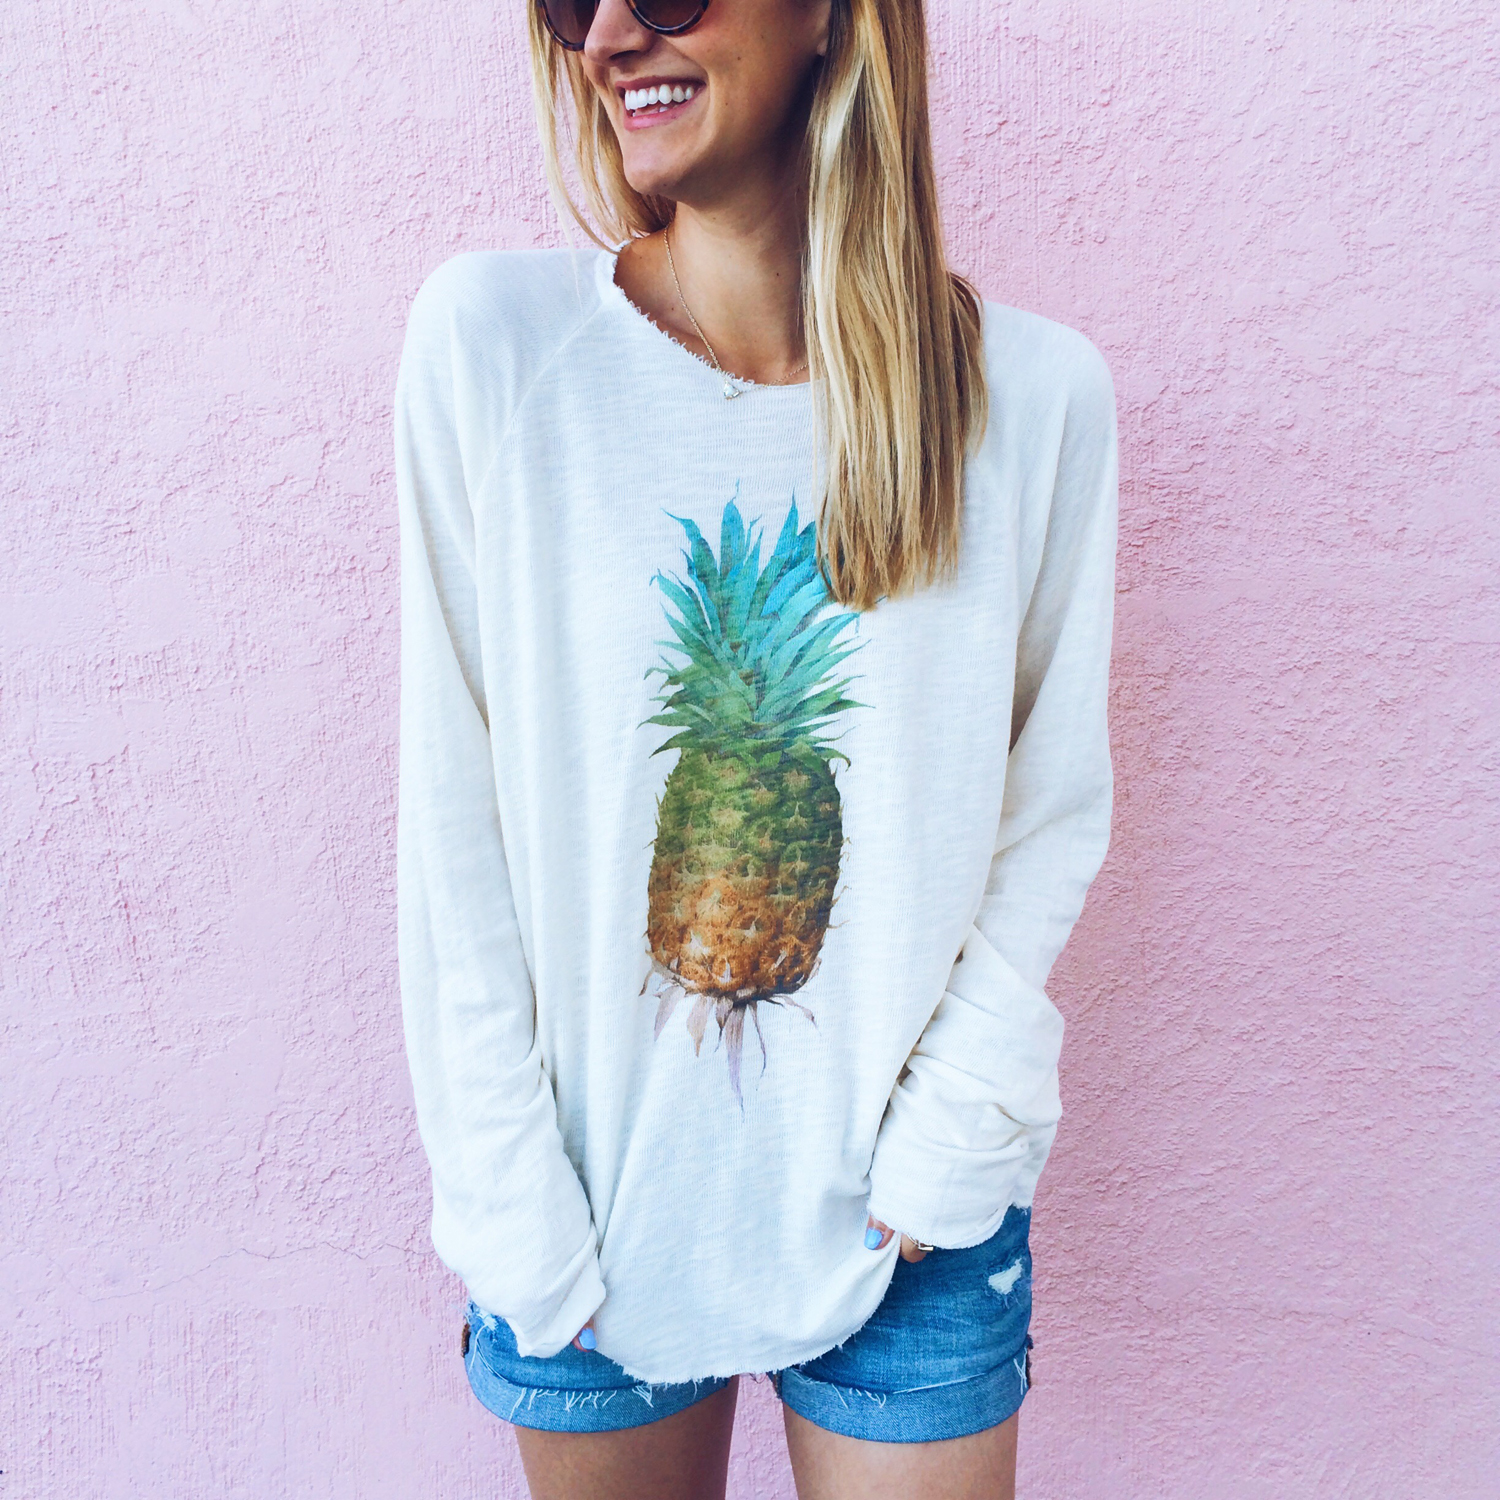 livvyland-blog-olivia-watson-austin-texas-fashion-blogger-wildfox-pineapple-sweater-cutoff-denim-pink-wall